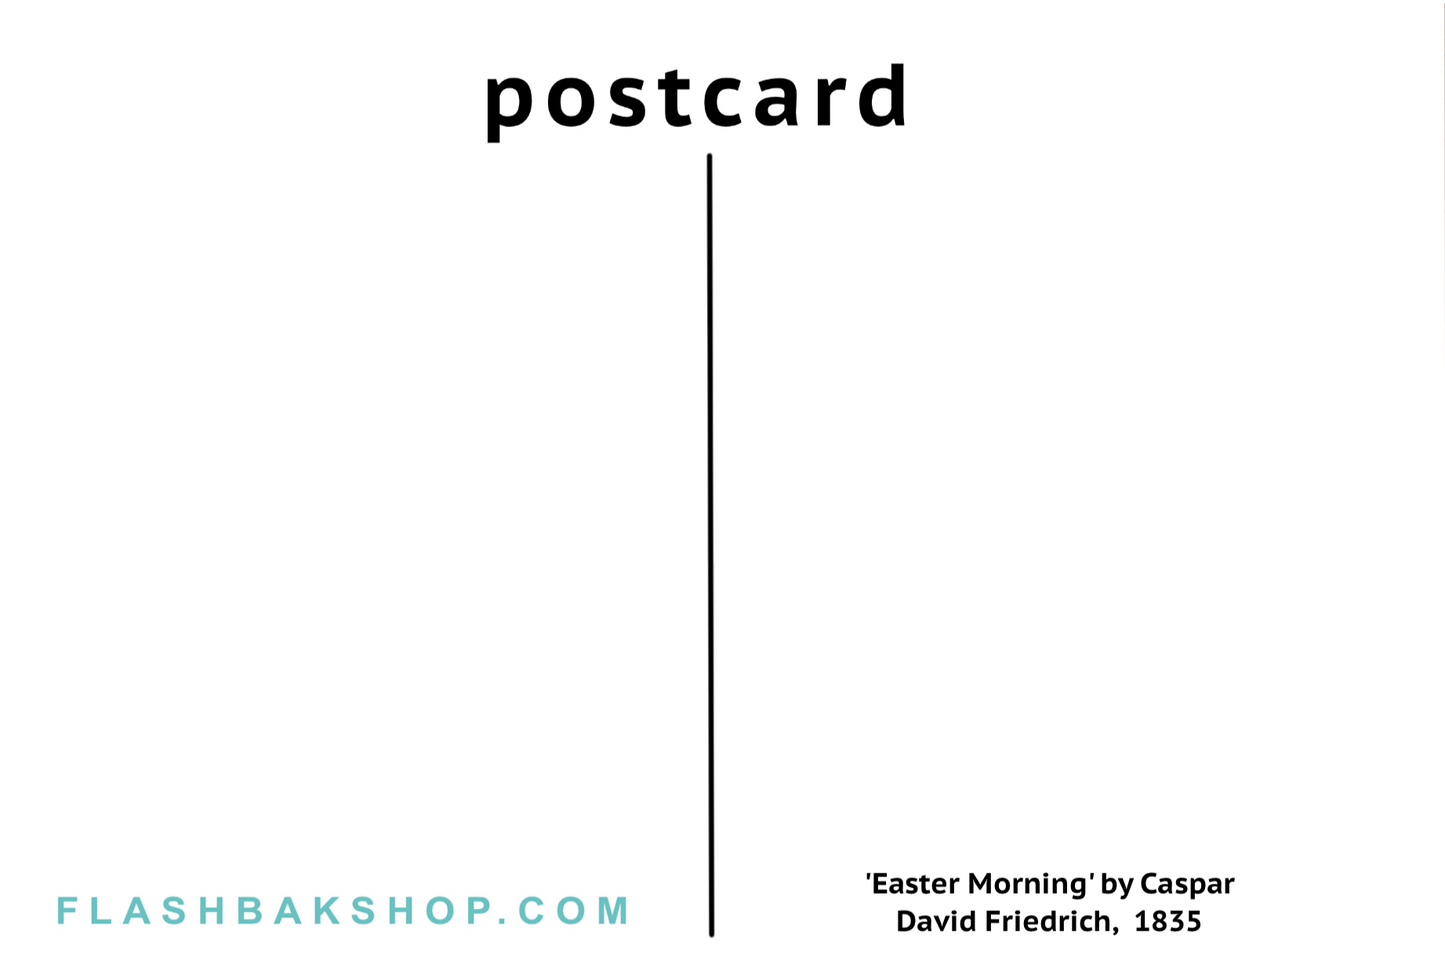 Easter Morning by Caspar David Friedrich, 1835 - Postcard